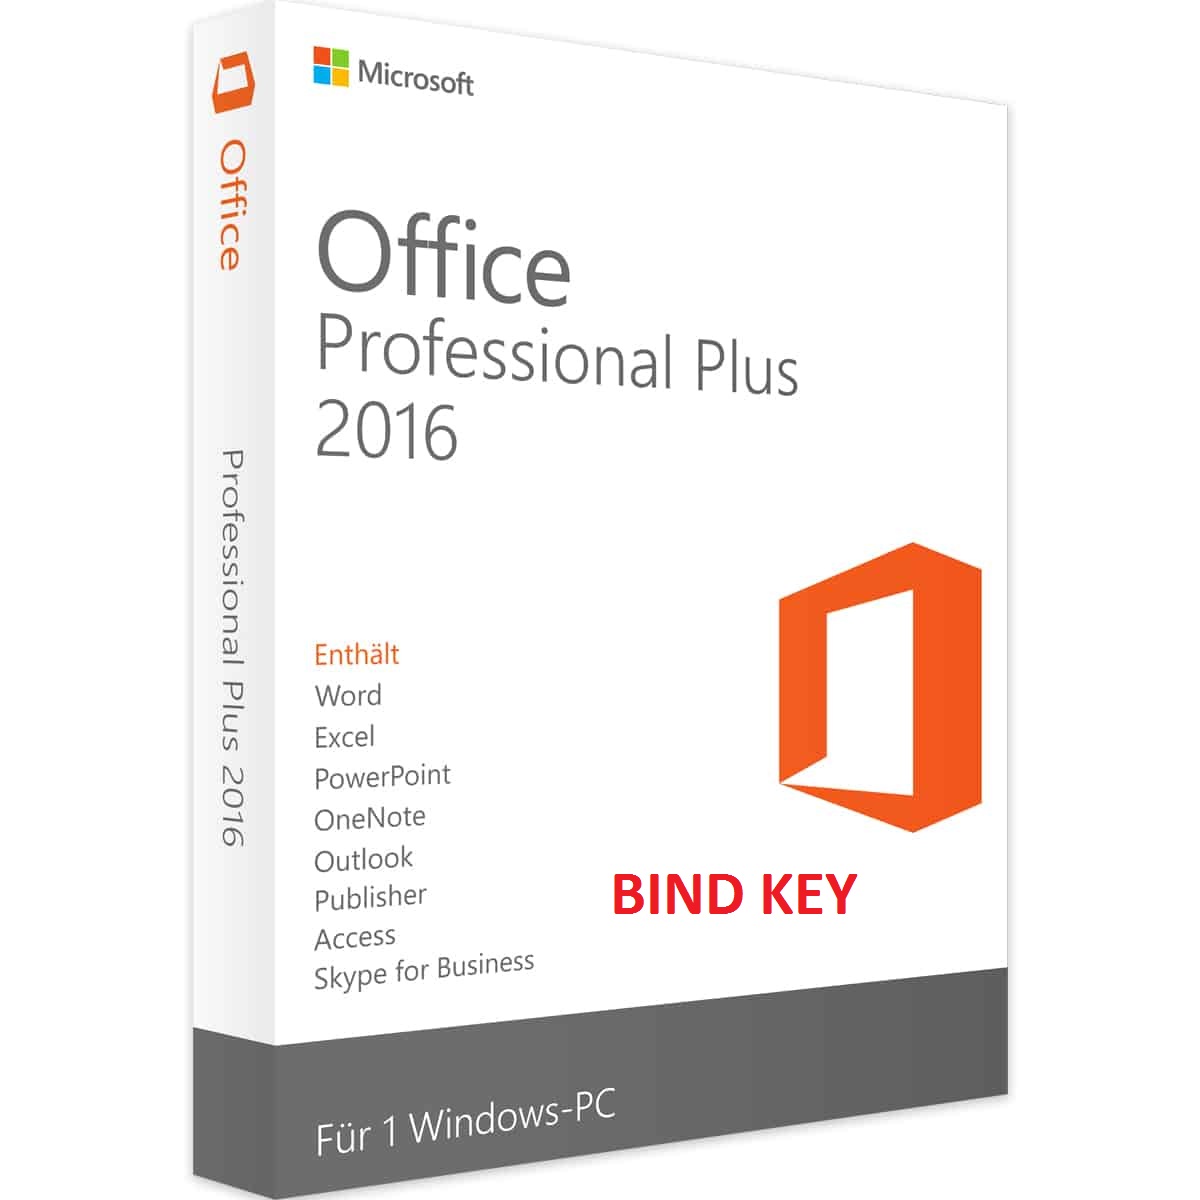 1678454080.MS Office 2016 Professional Plus Bind Key